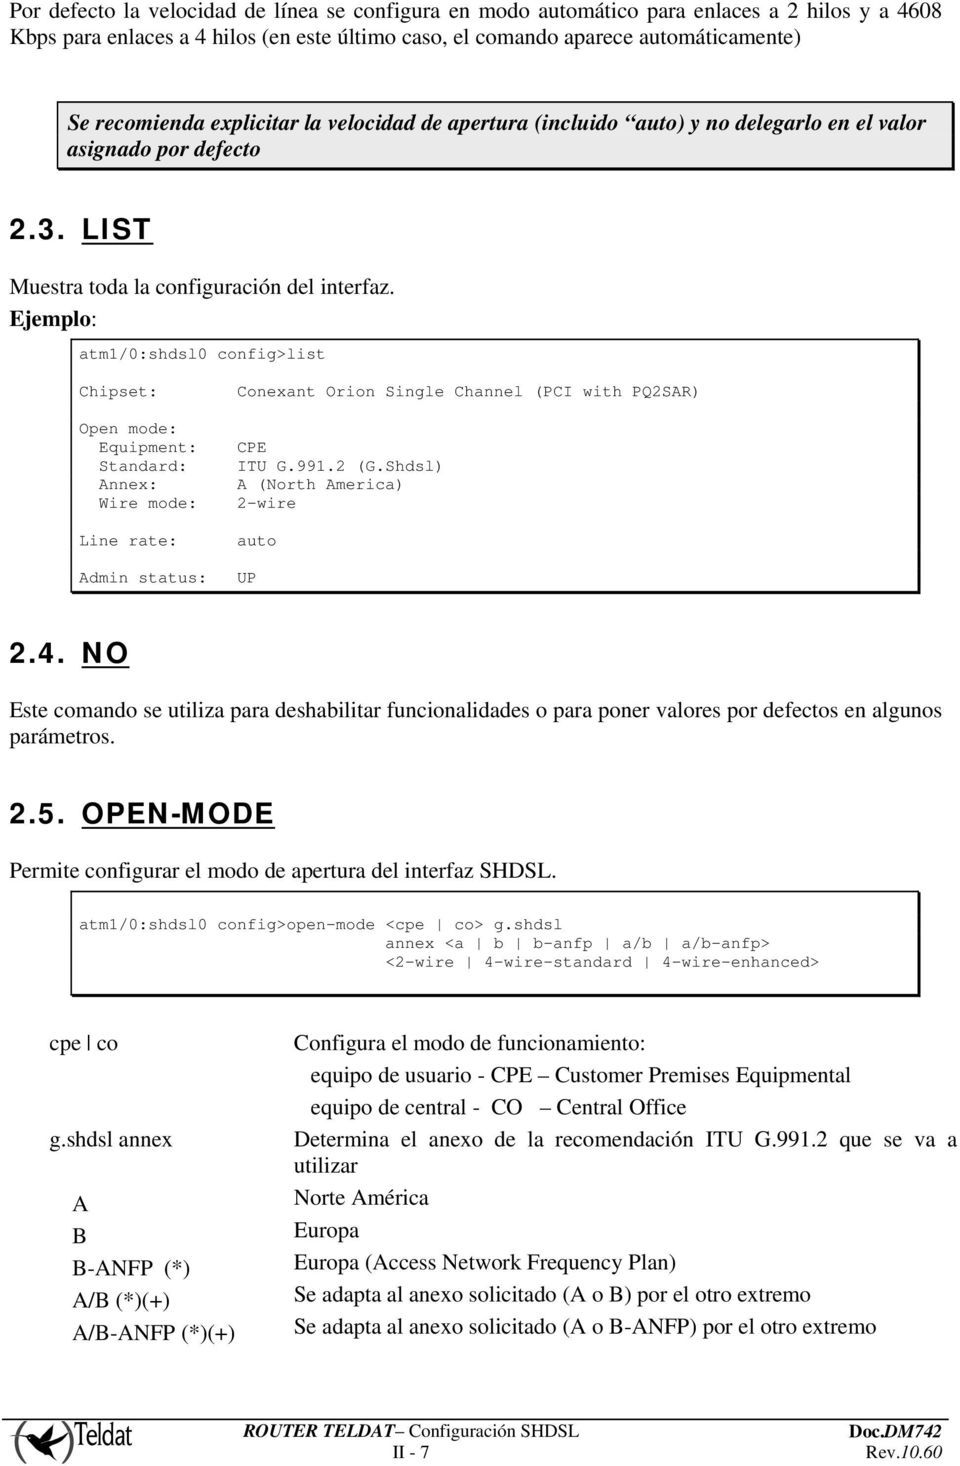 Ejemplo: atm1/0:shdsl0 config>list Chipset: Open mode: Equipment: Standard: Annex: Wire mode: Line rate: Admin status: Conexant Orion Single Channel (PCI with PQ2SAR) CPE ITU G.991.2 (G.